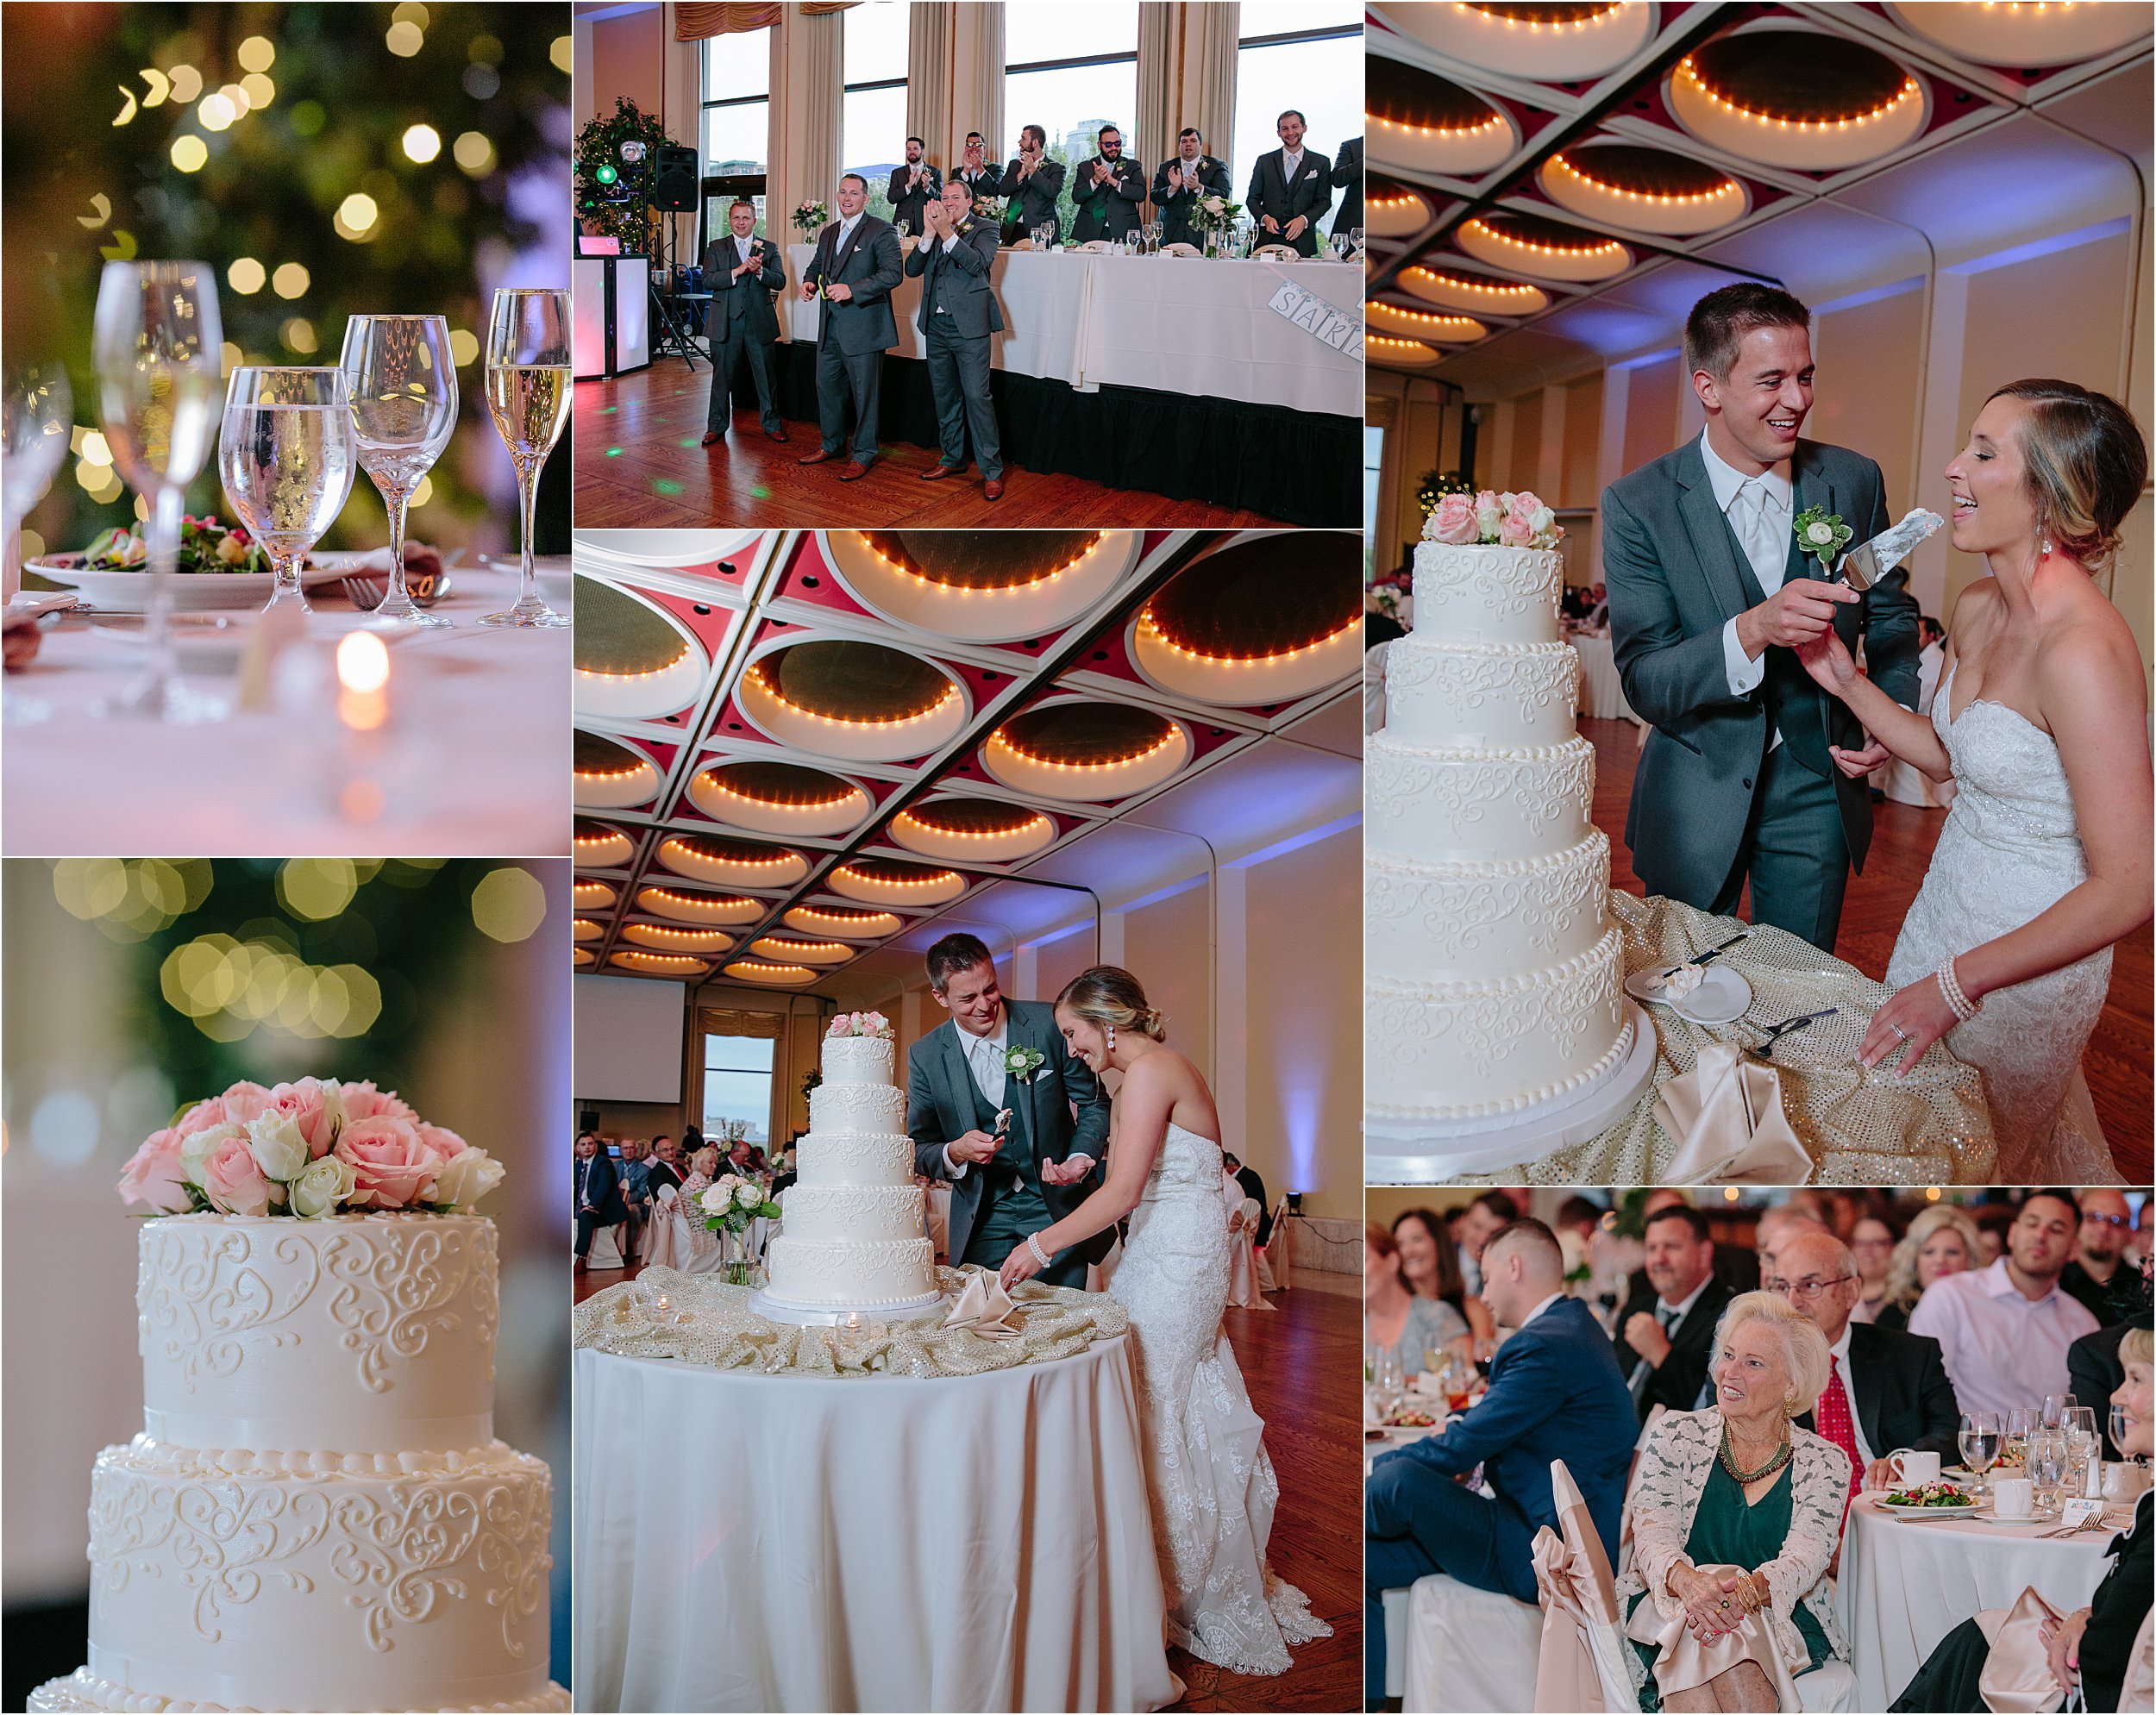 24-bride-groom-cutting-cake.JPG